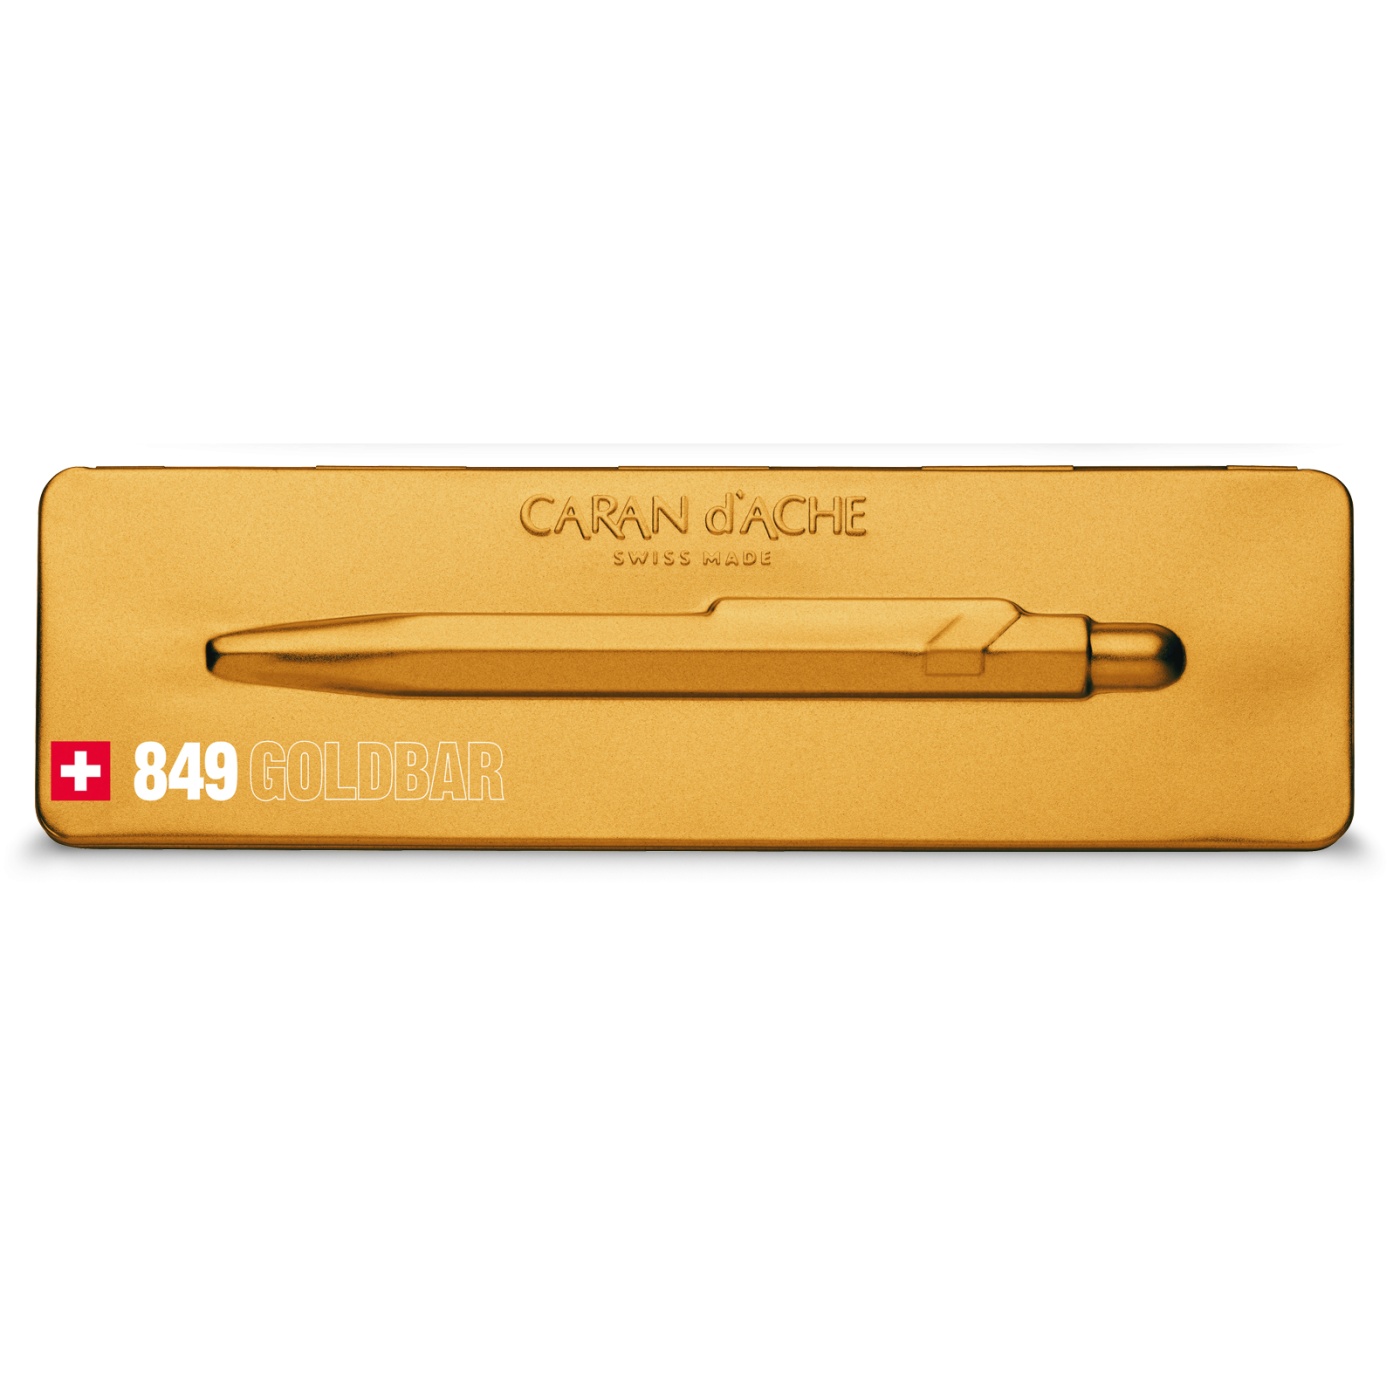 849 Goldbar Ballpoint in the group Pens / Fine Writing / Ballpoint Pens at Pen Store (100512)